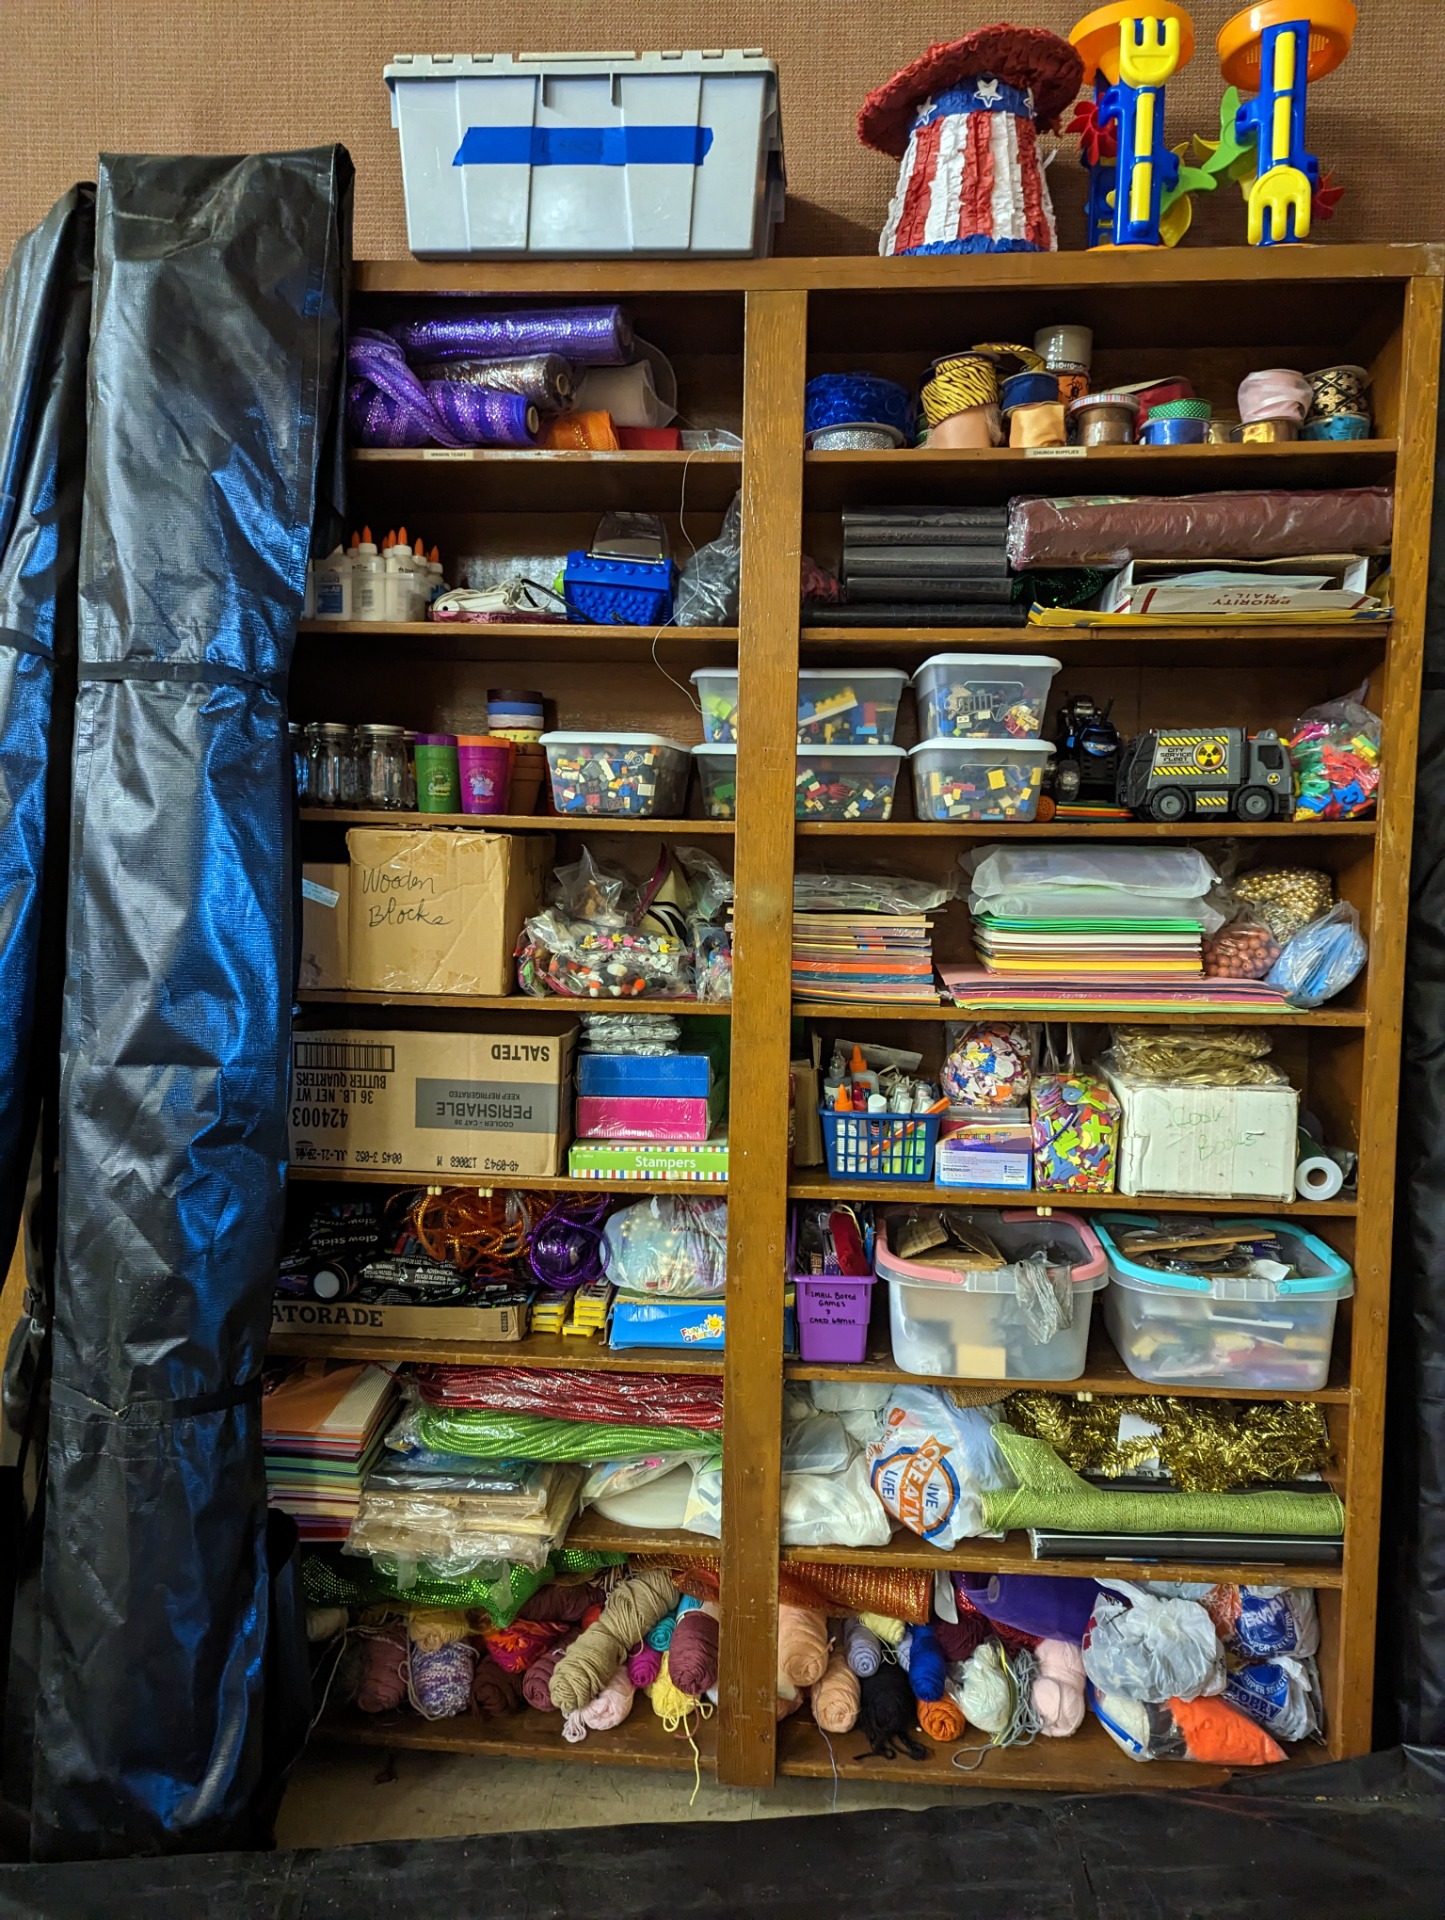 Organized Supply Shelves